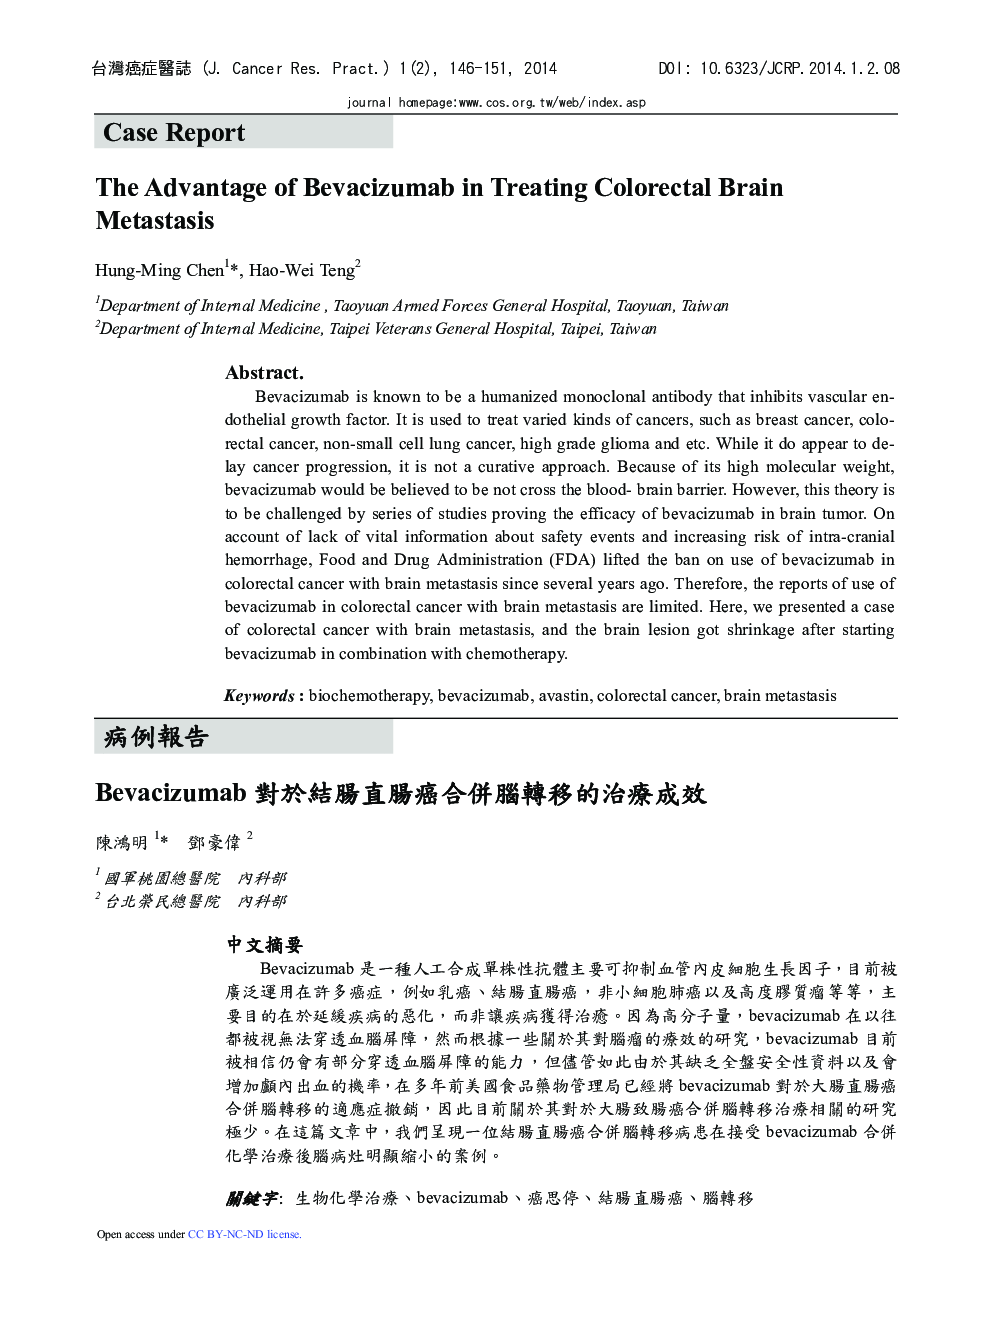 The Advantage of Bevacizumab in Treating Colorectal Brain Metastasis